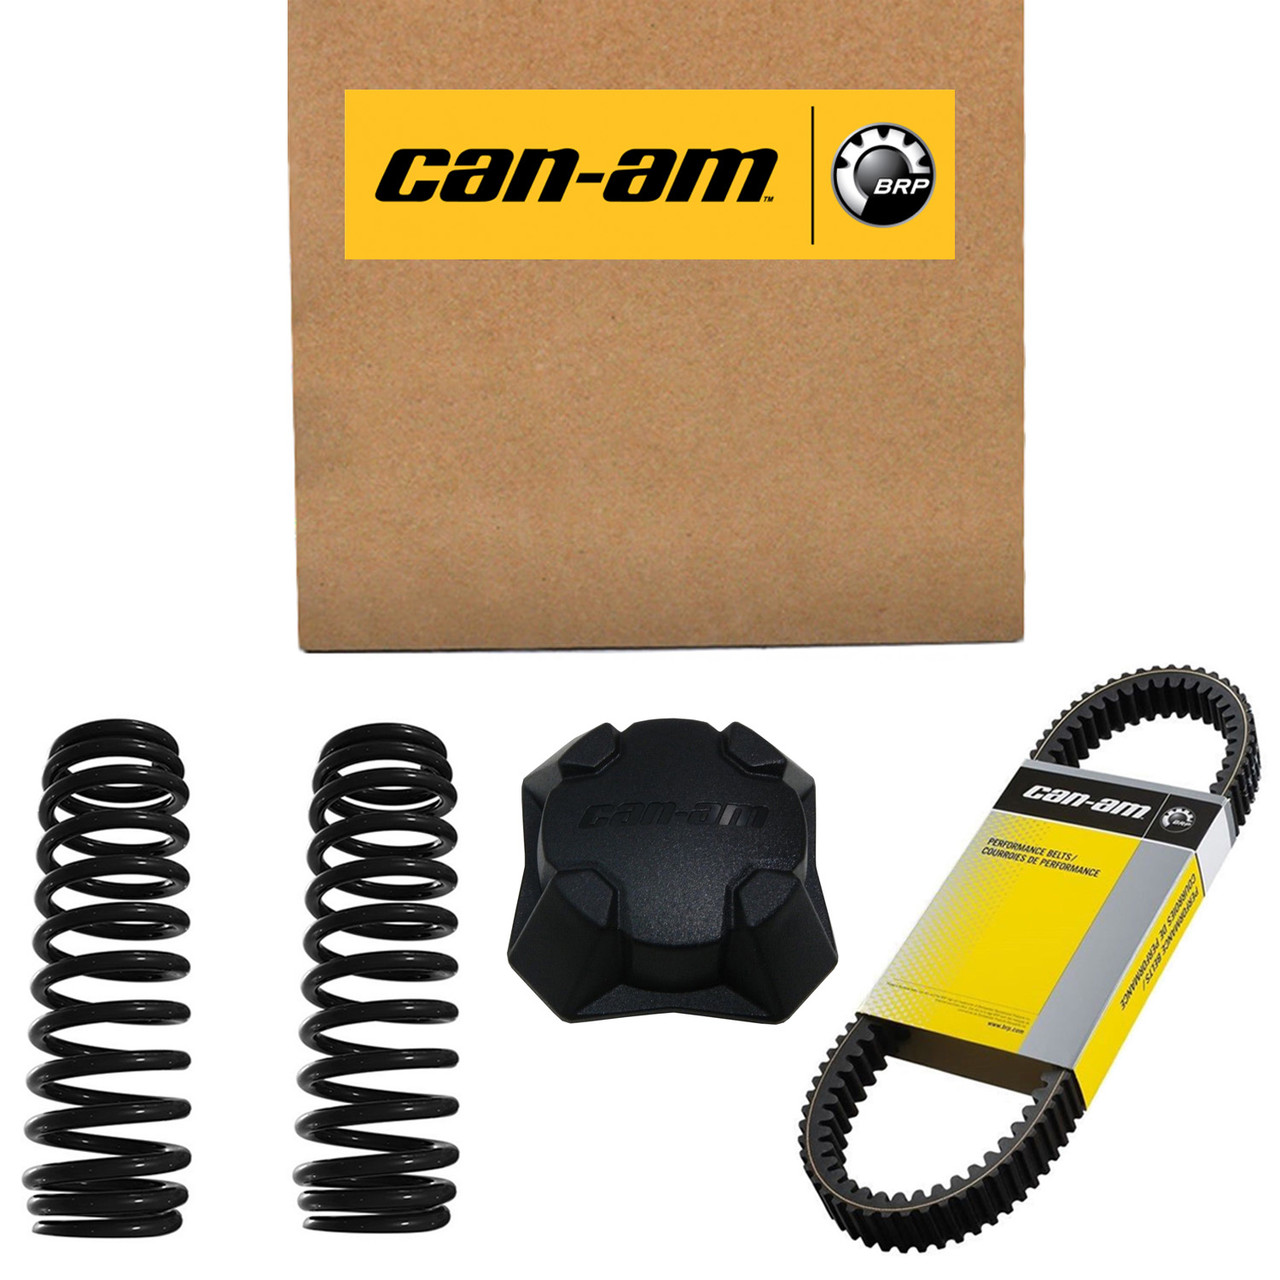 Can-Am New OEM Rh Rear Tail Light, 710002501